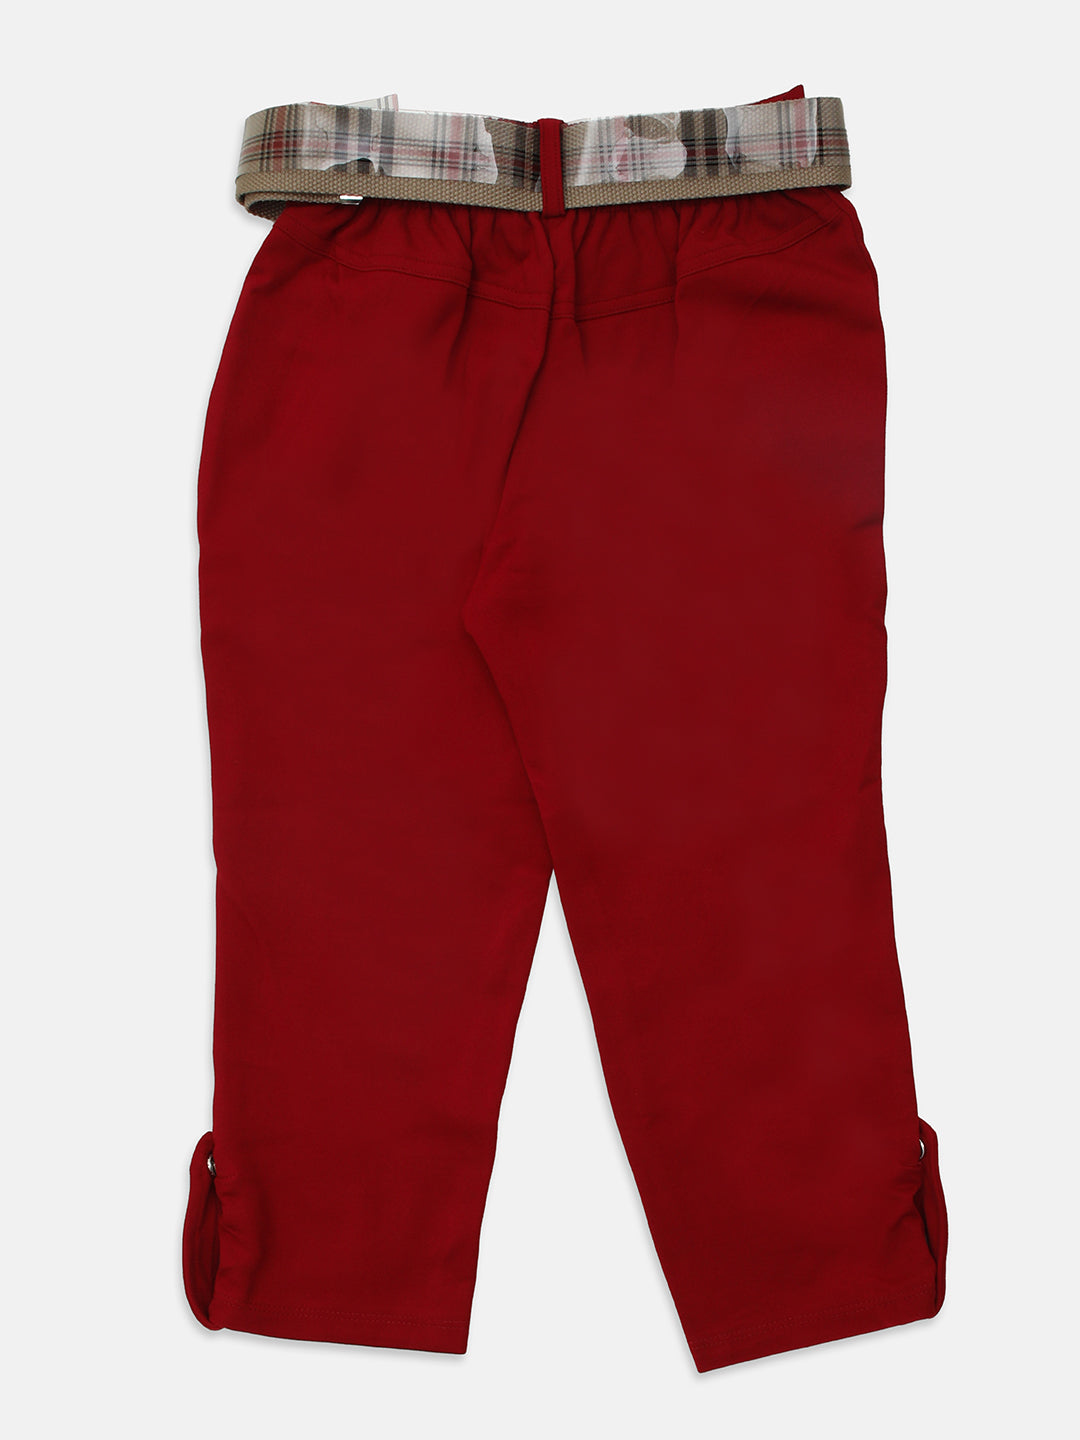 Ziama Girls Stylish Solid Capri With Belt- Red